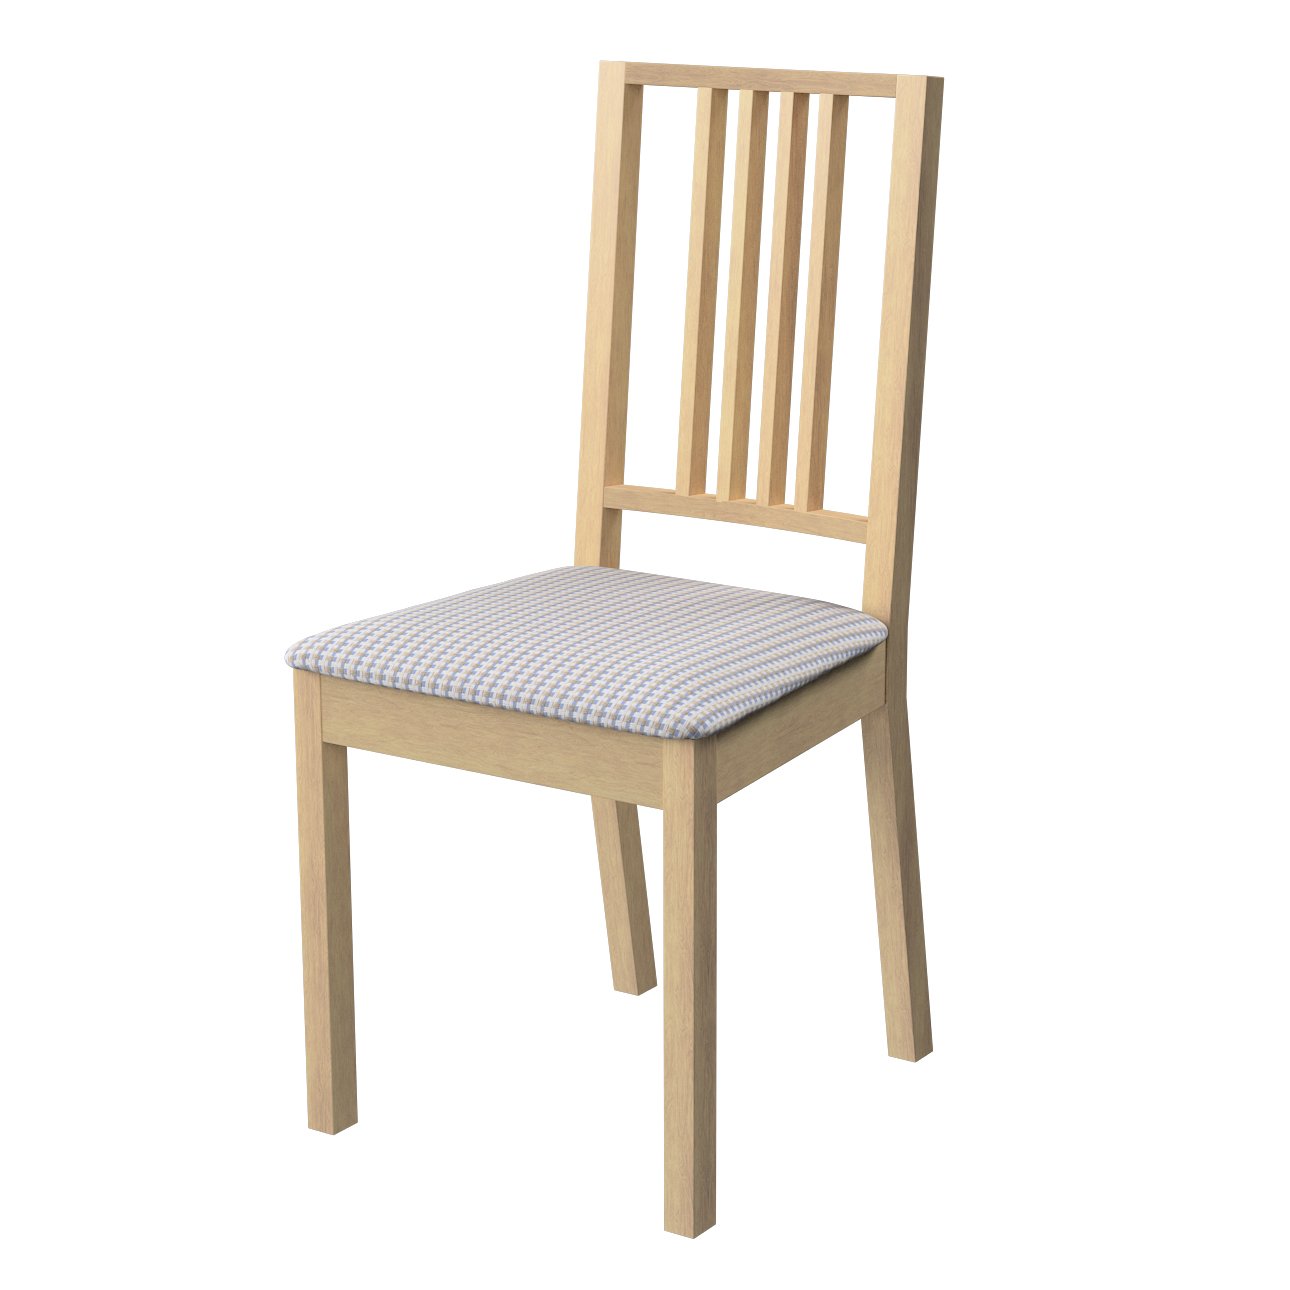 Dekoria Potah na sedák židle Börje, béžová a modrá, potah sedák židle Börje, Living II, 162-23